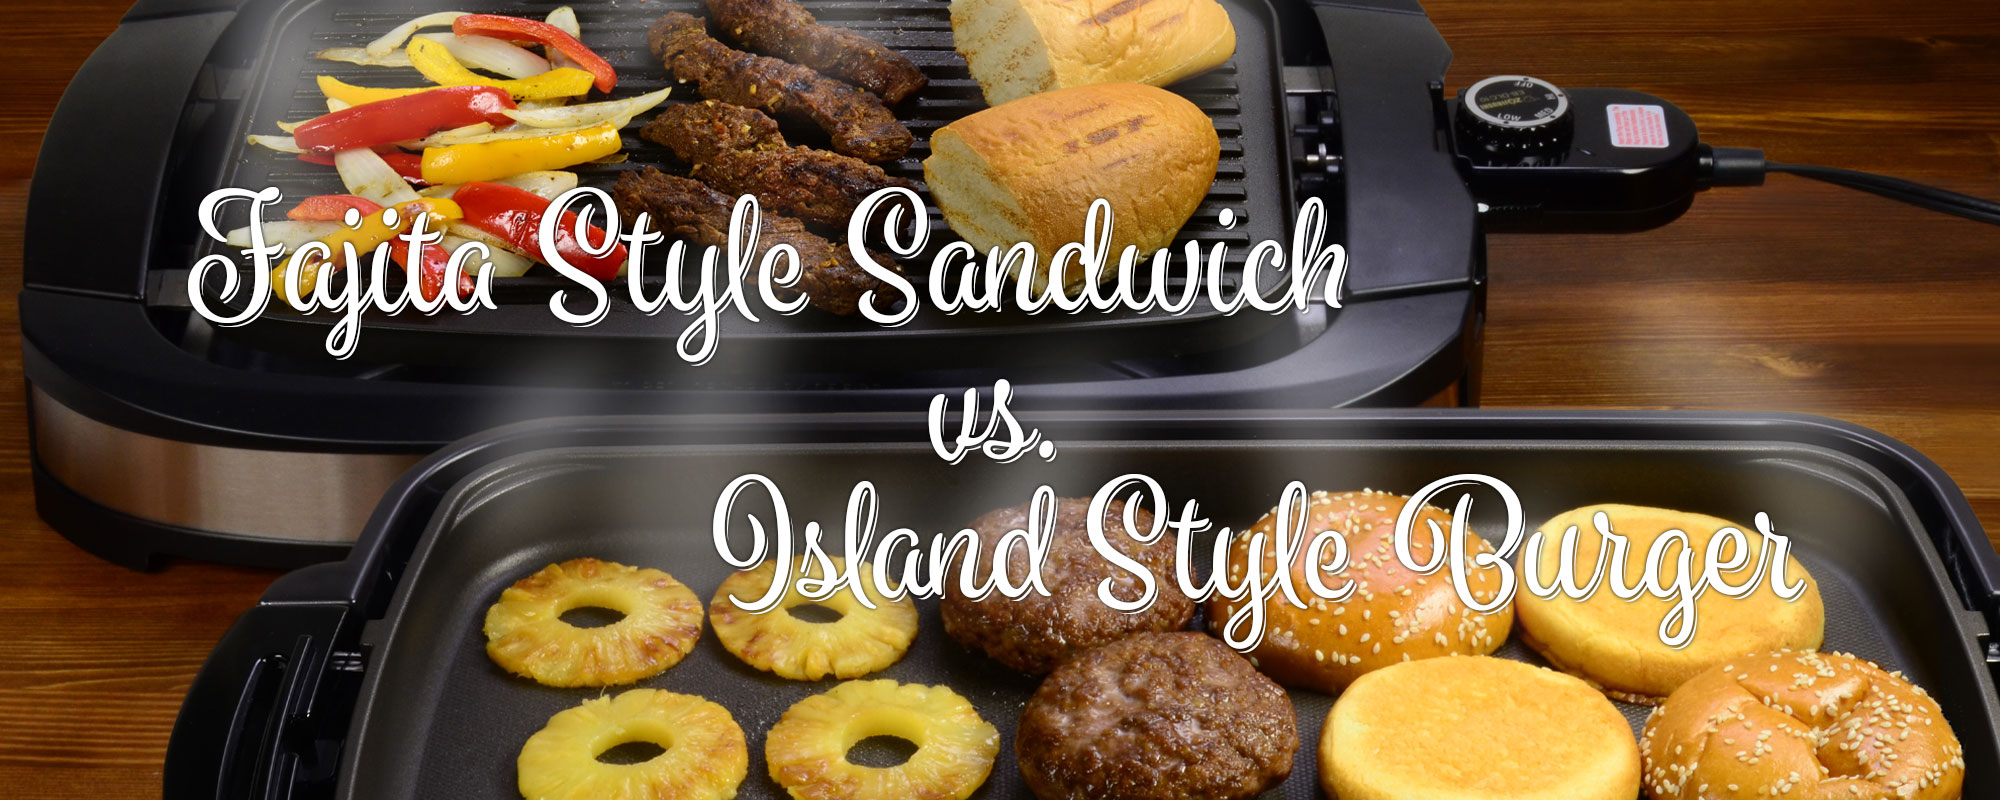 Fajita Style Sandwich vs. Island Style Burger